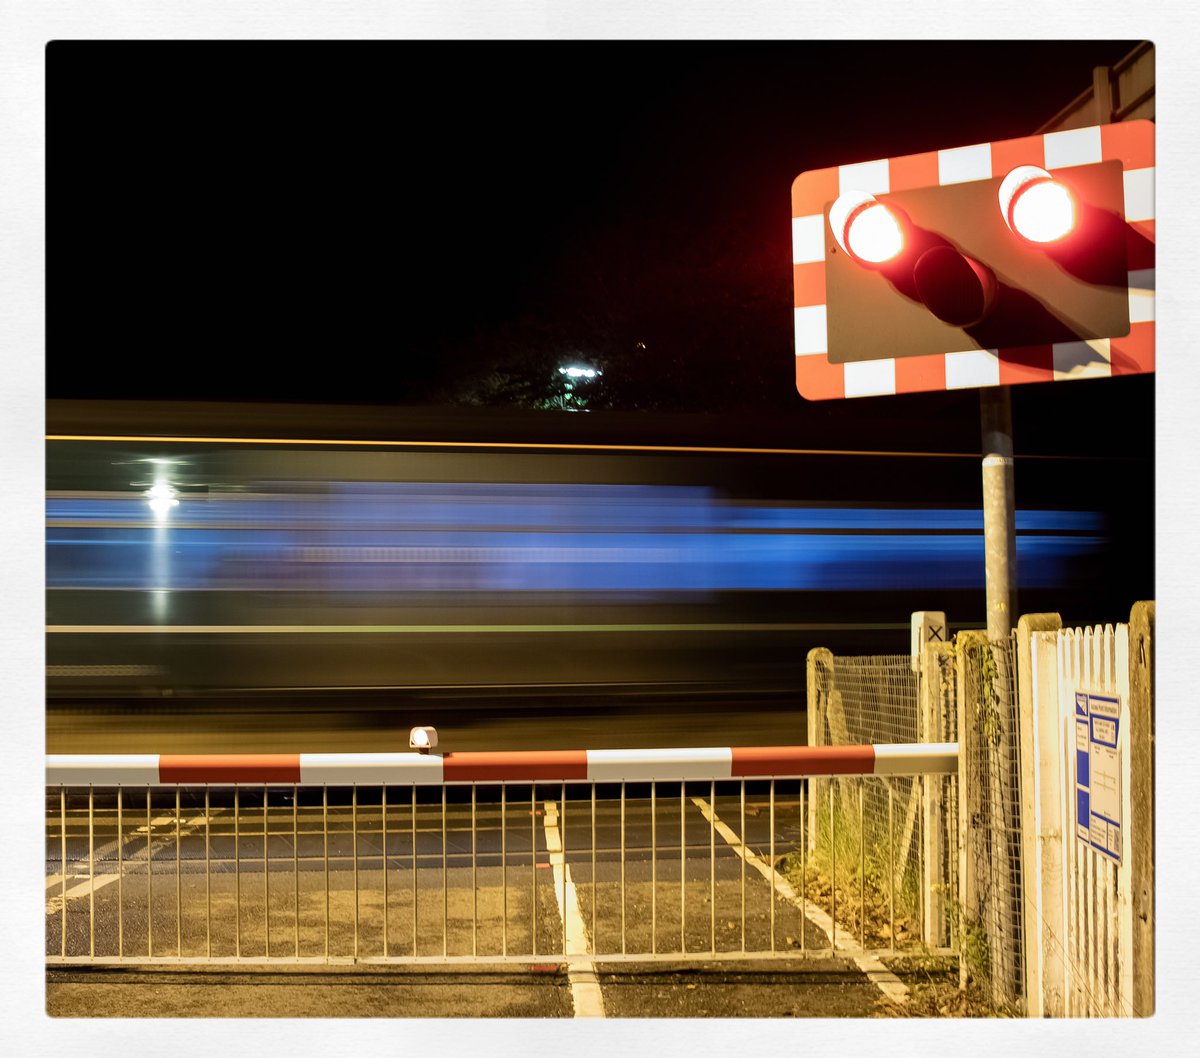 Catch the fast train 🚊

#streetphoto #streetphotography #StreetStyle #londonstreets #myspc #lifeisstreet